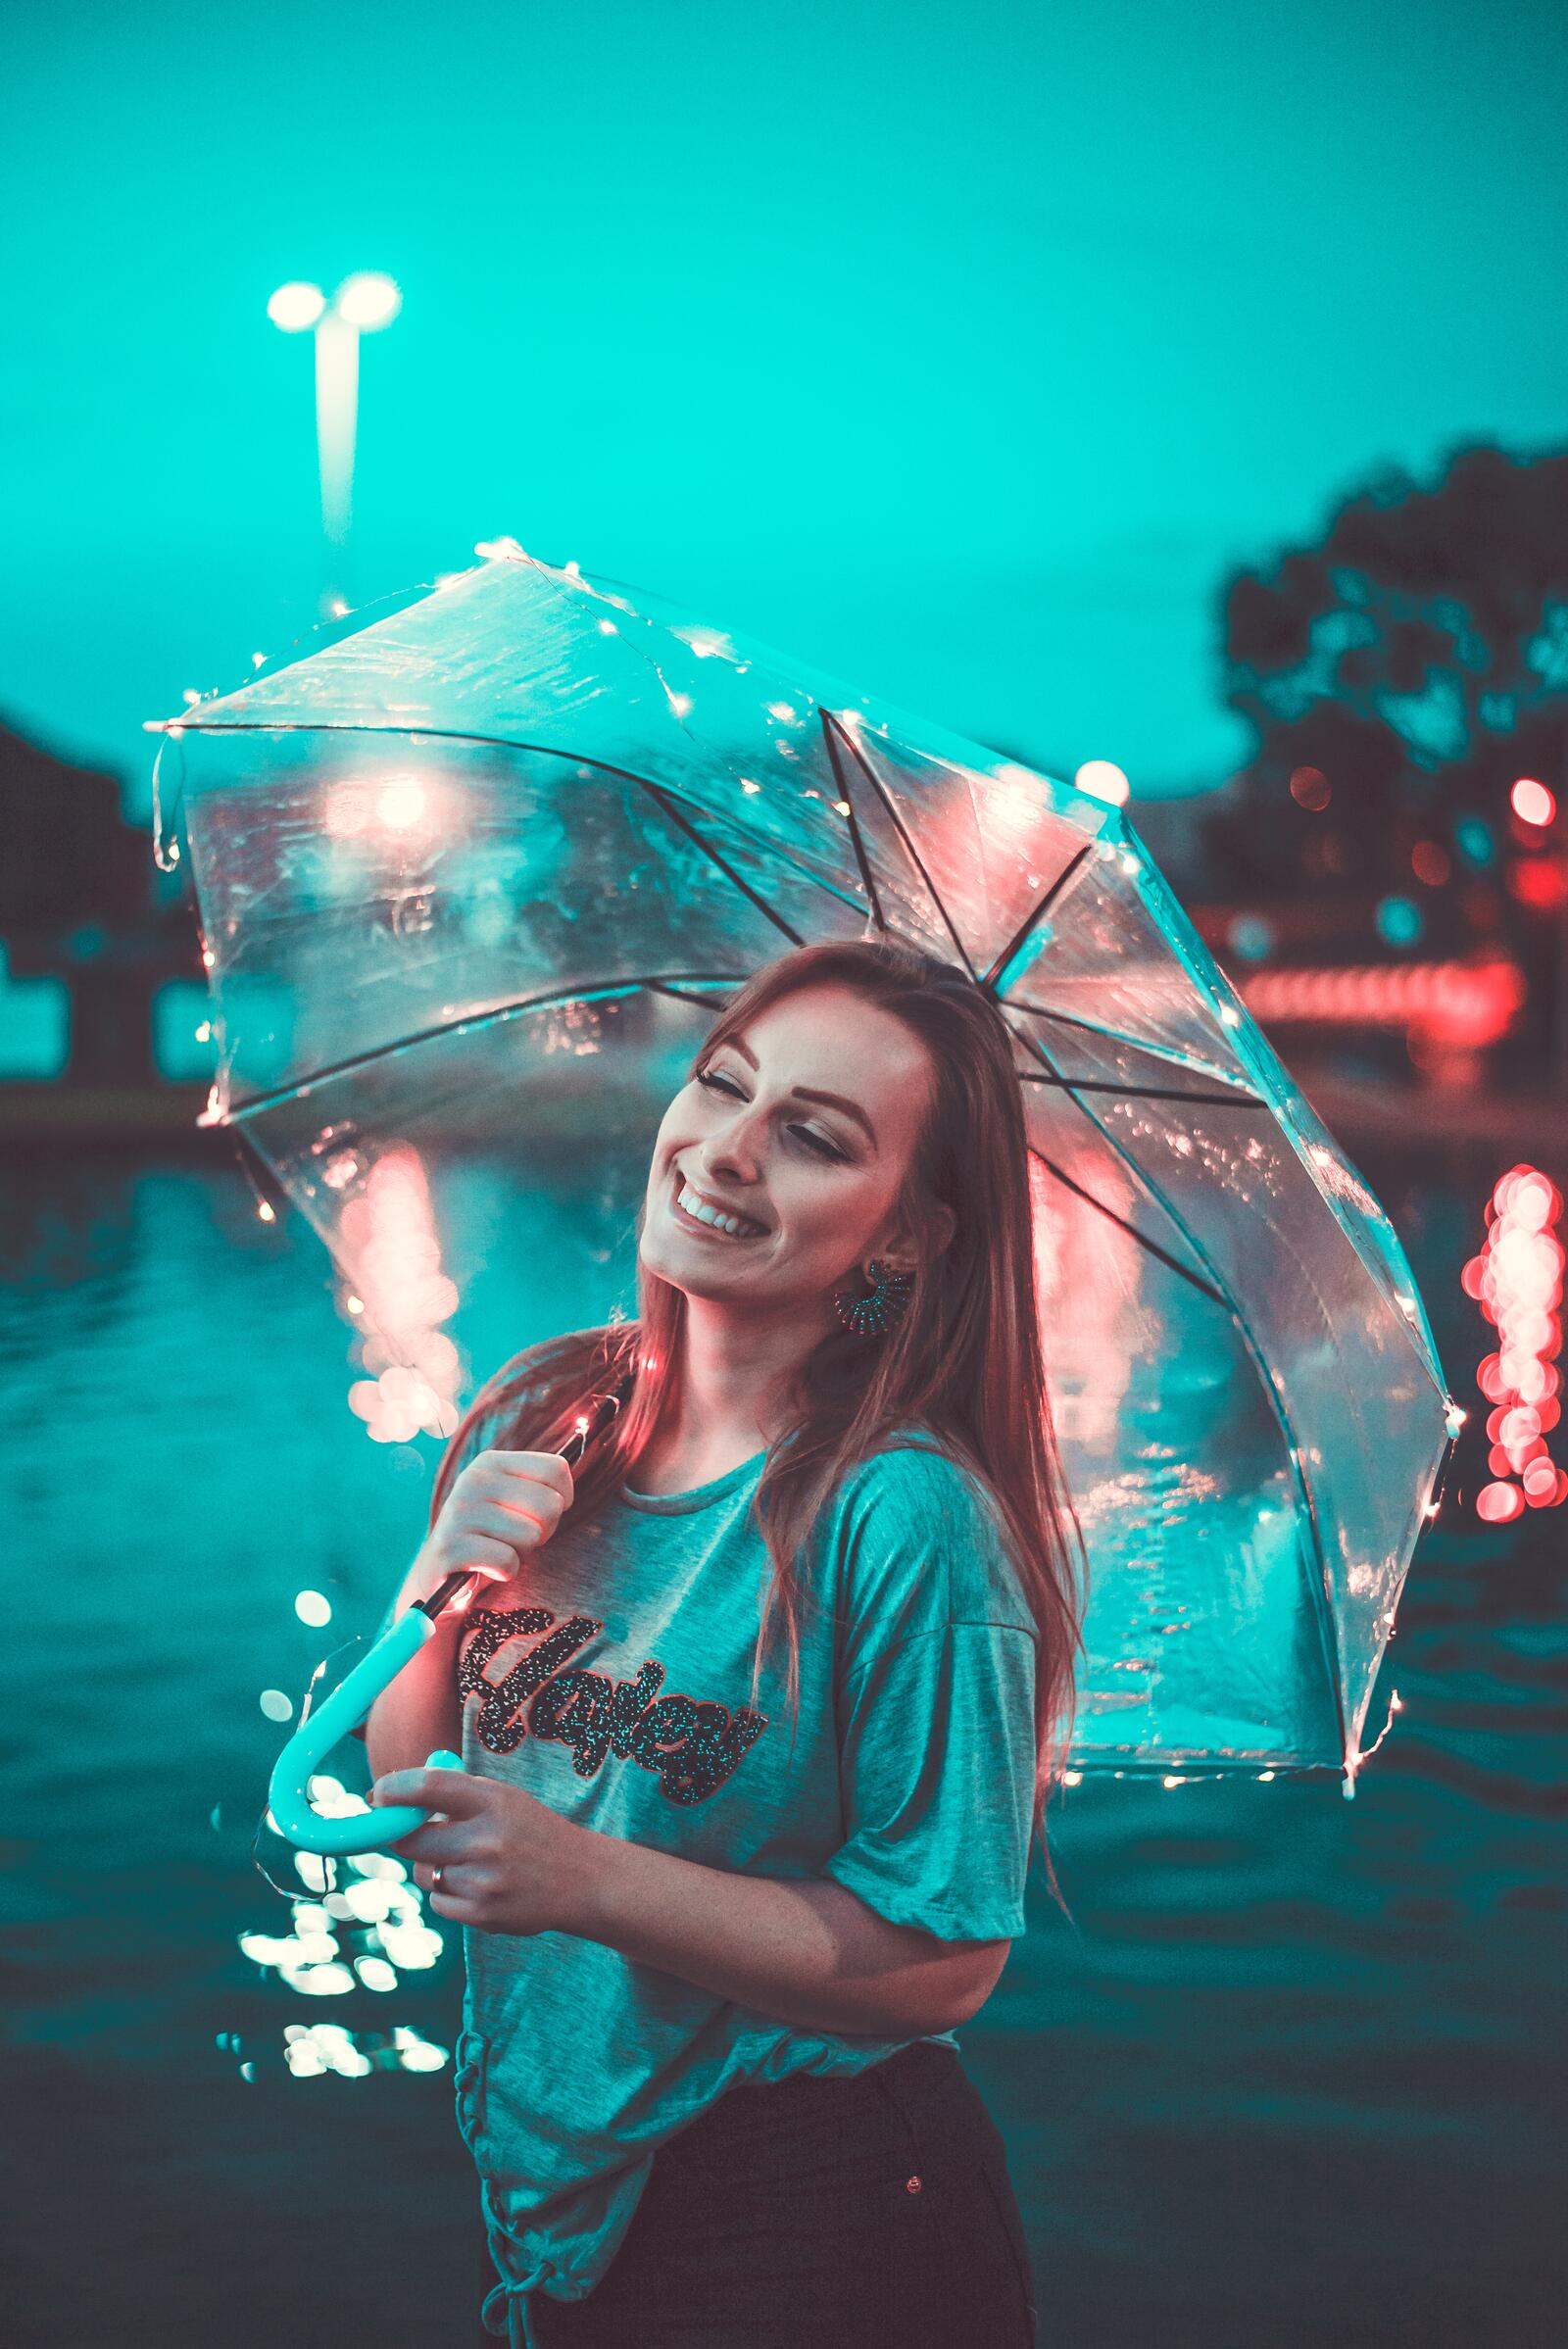 Wallpapers woman smiling transparent umbrella on the desktop